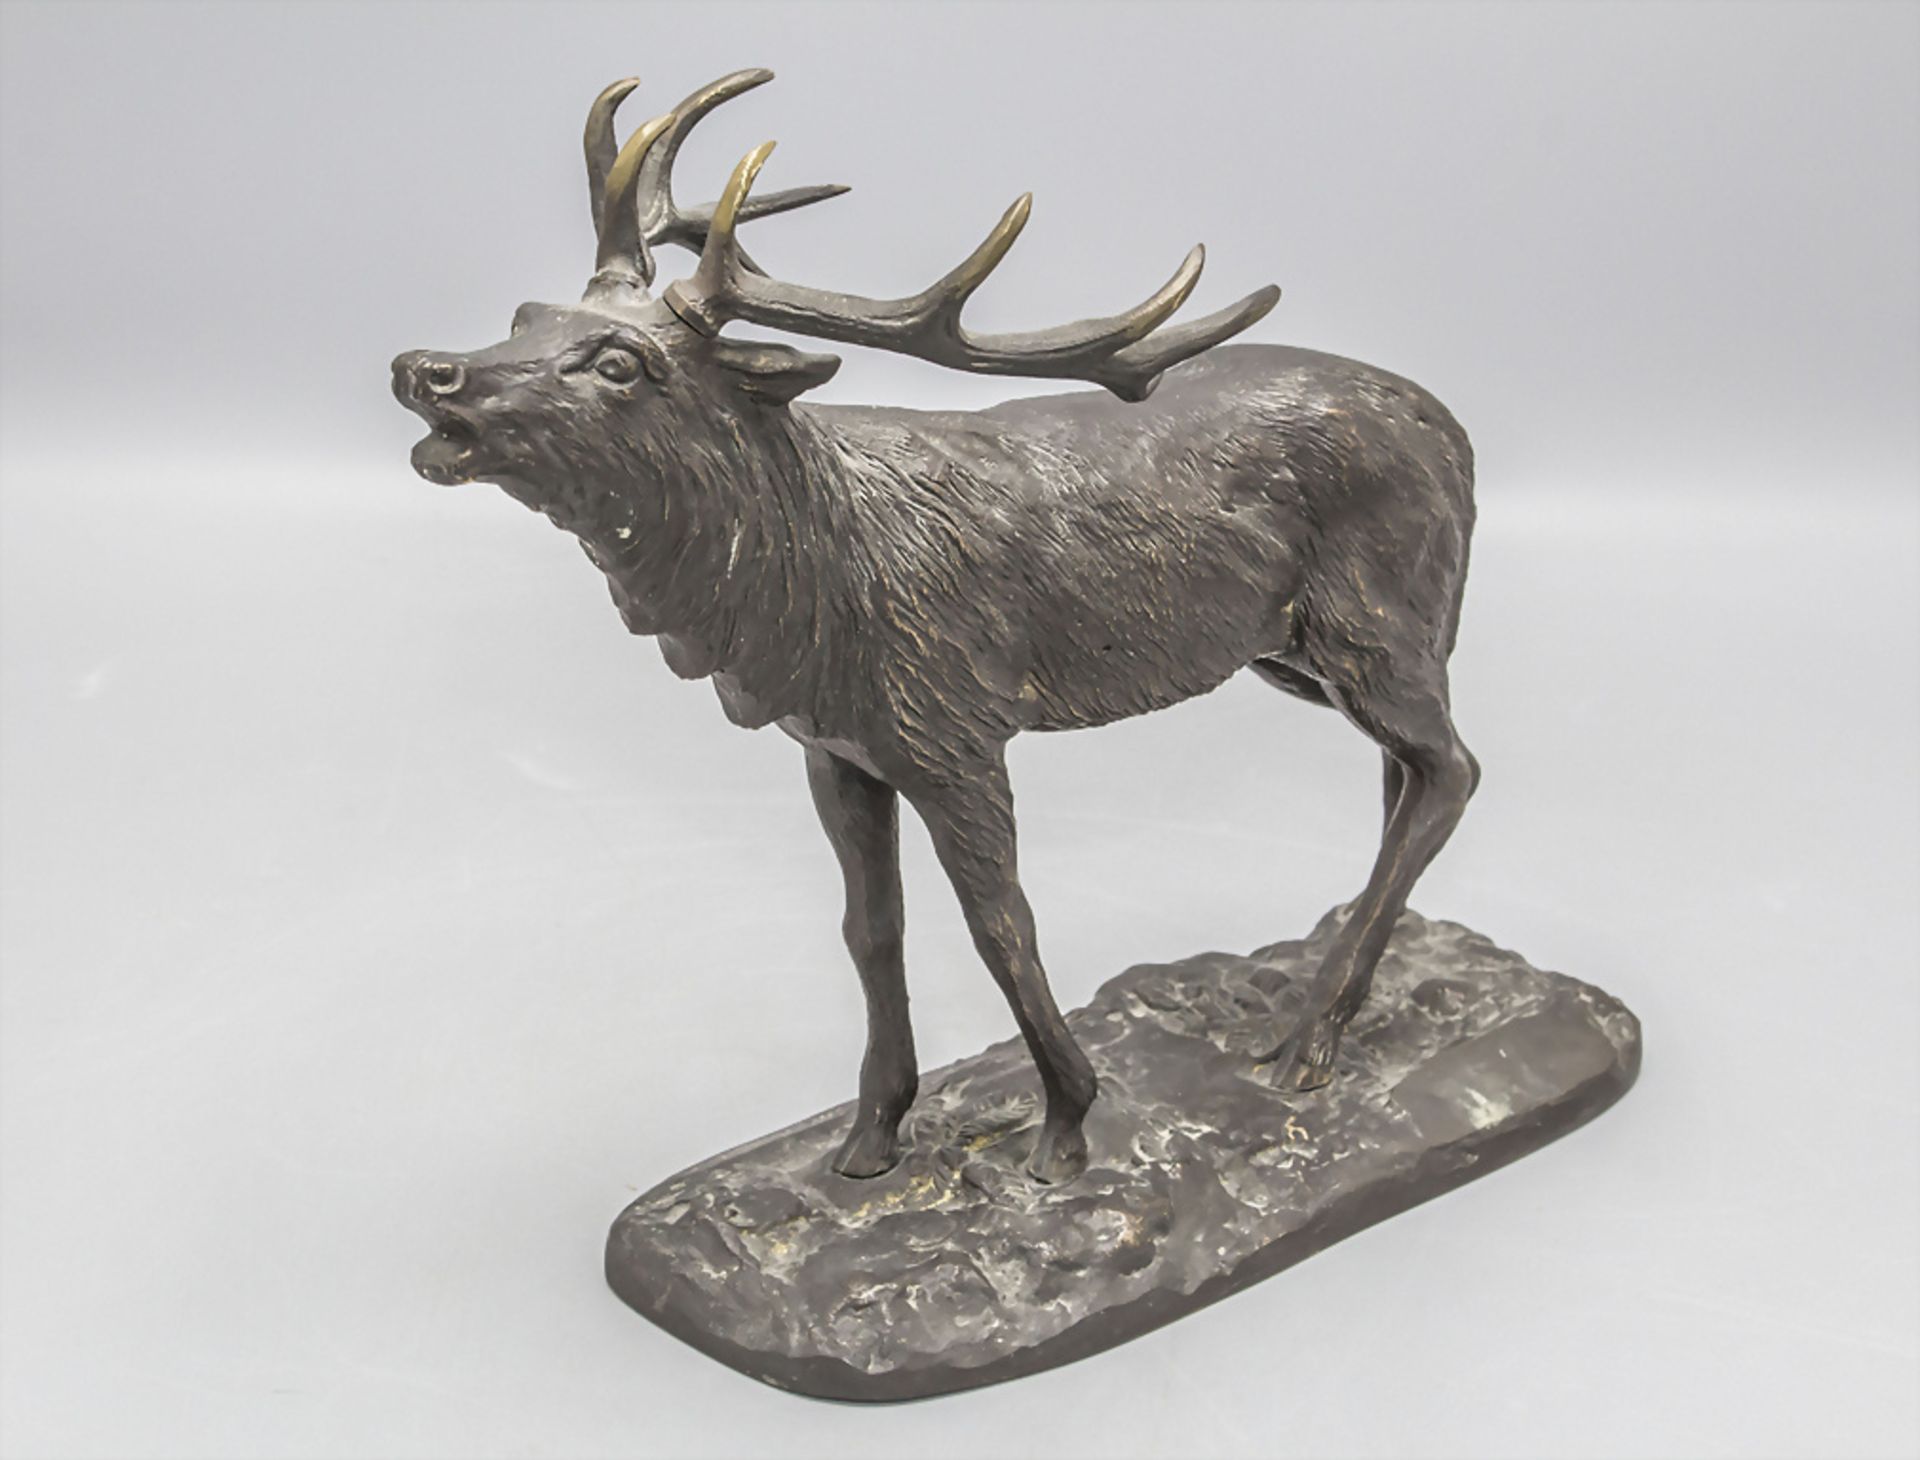 Bronzeplastik 'Röhrender Hirsch' / A bronze sculpture of a roaring stag, 20. Jh.